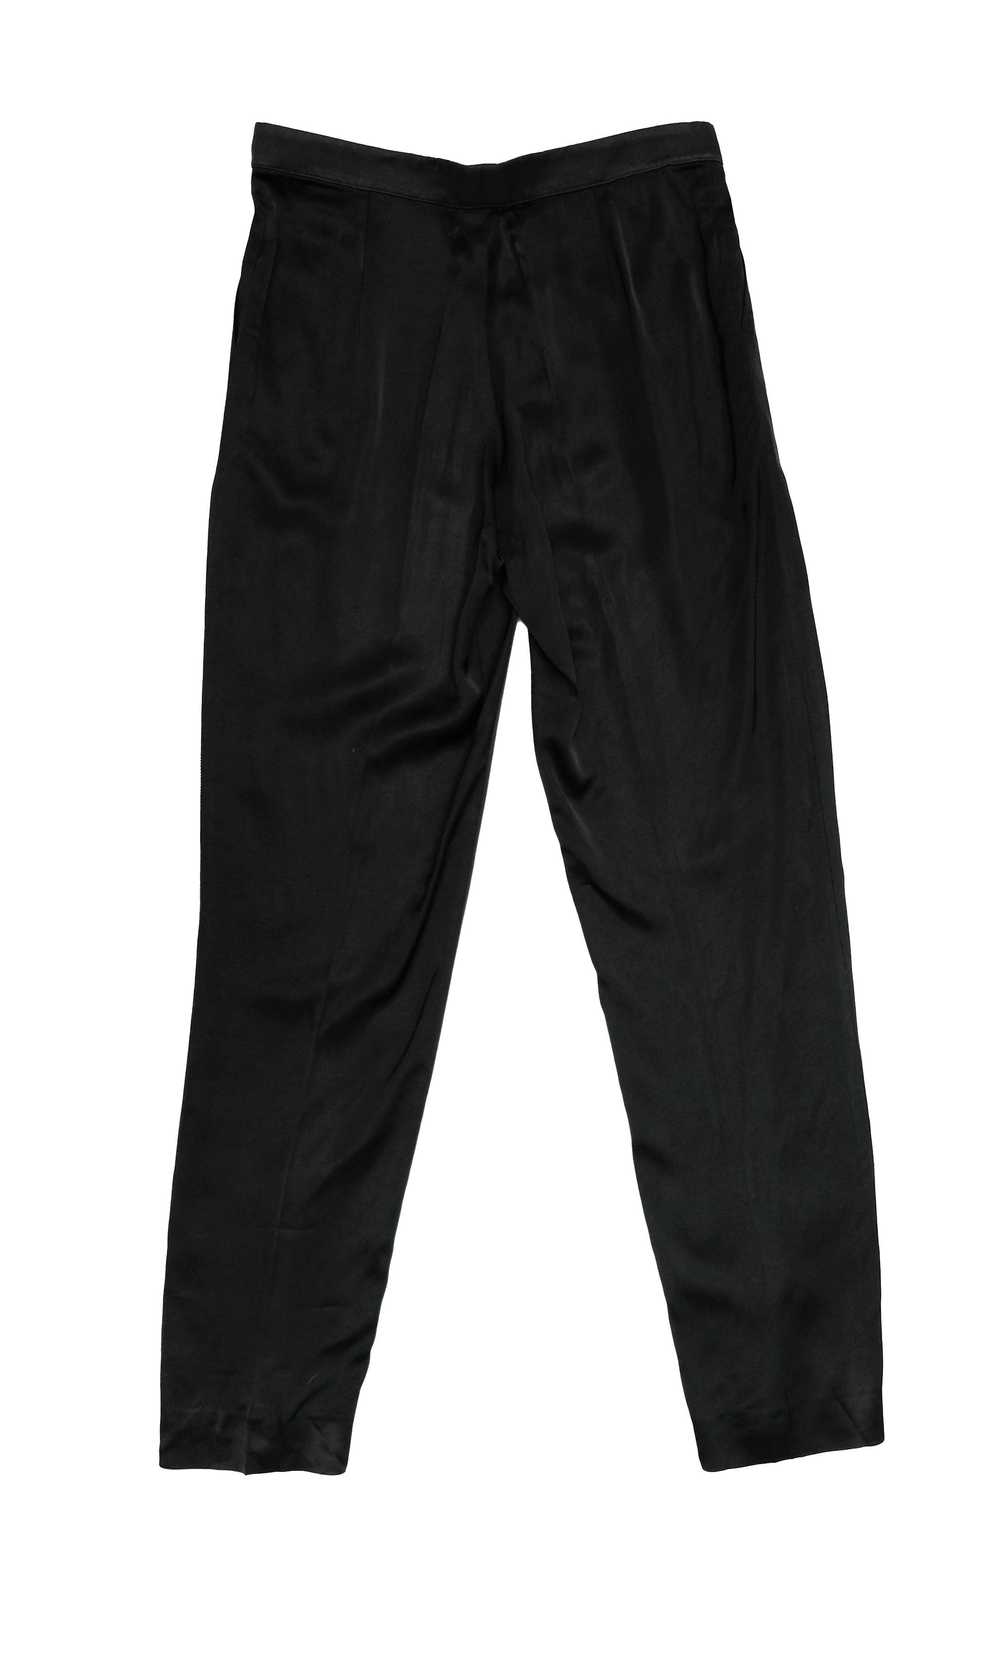 Lanvin Eté 2006 Formal Trousers in Black Silk, UK… - image 6